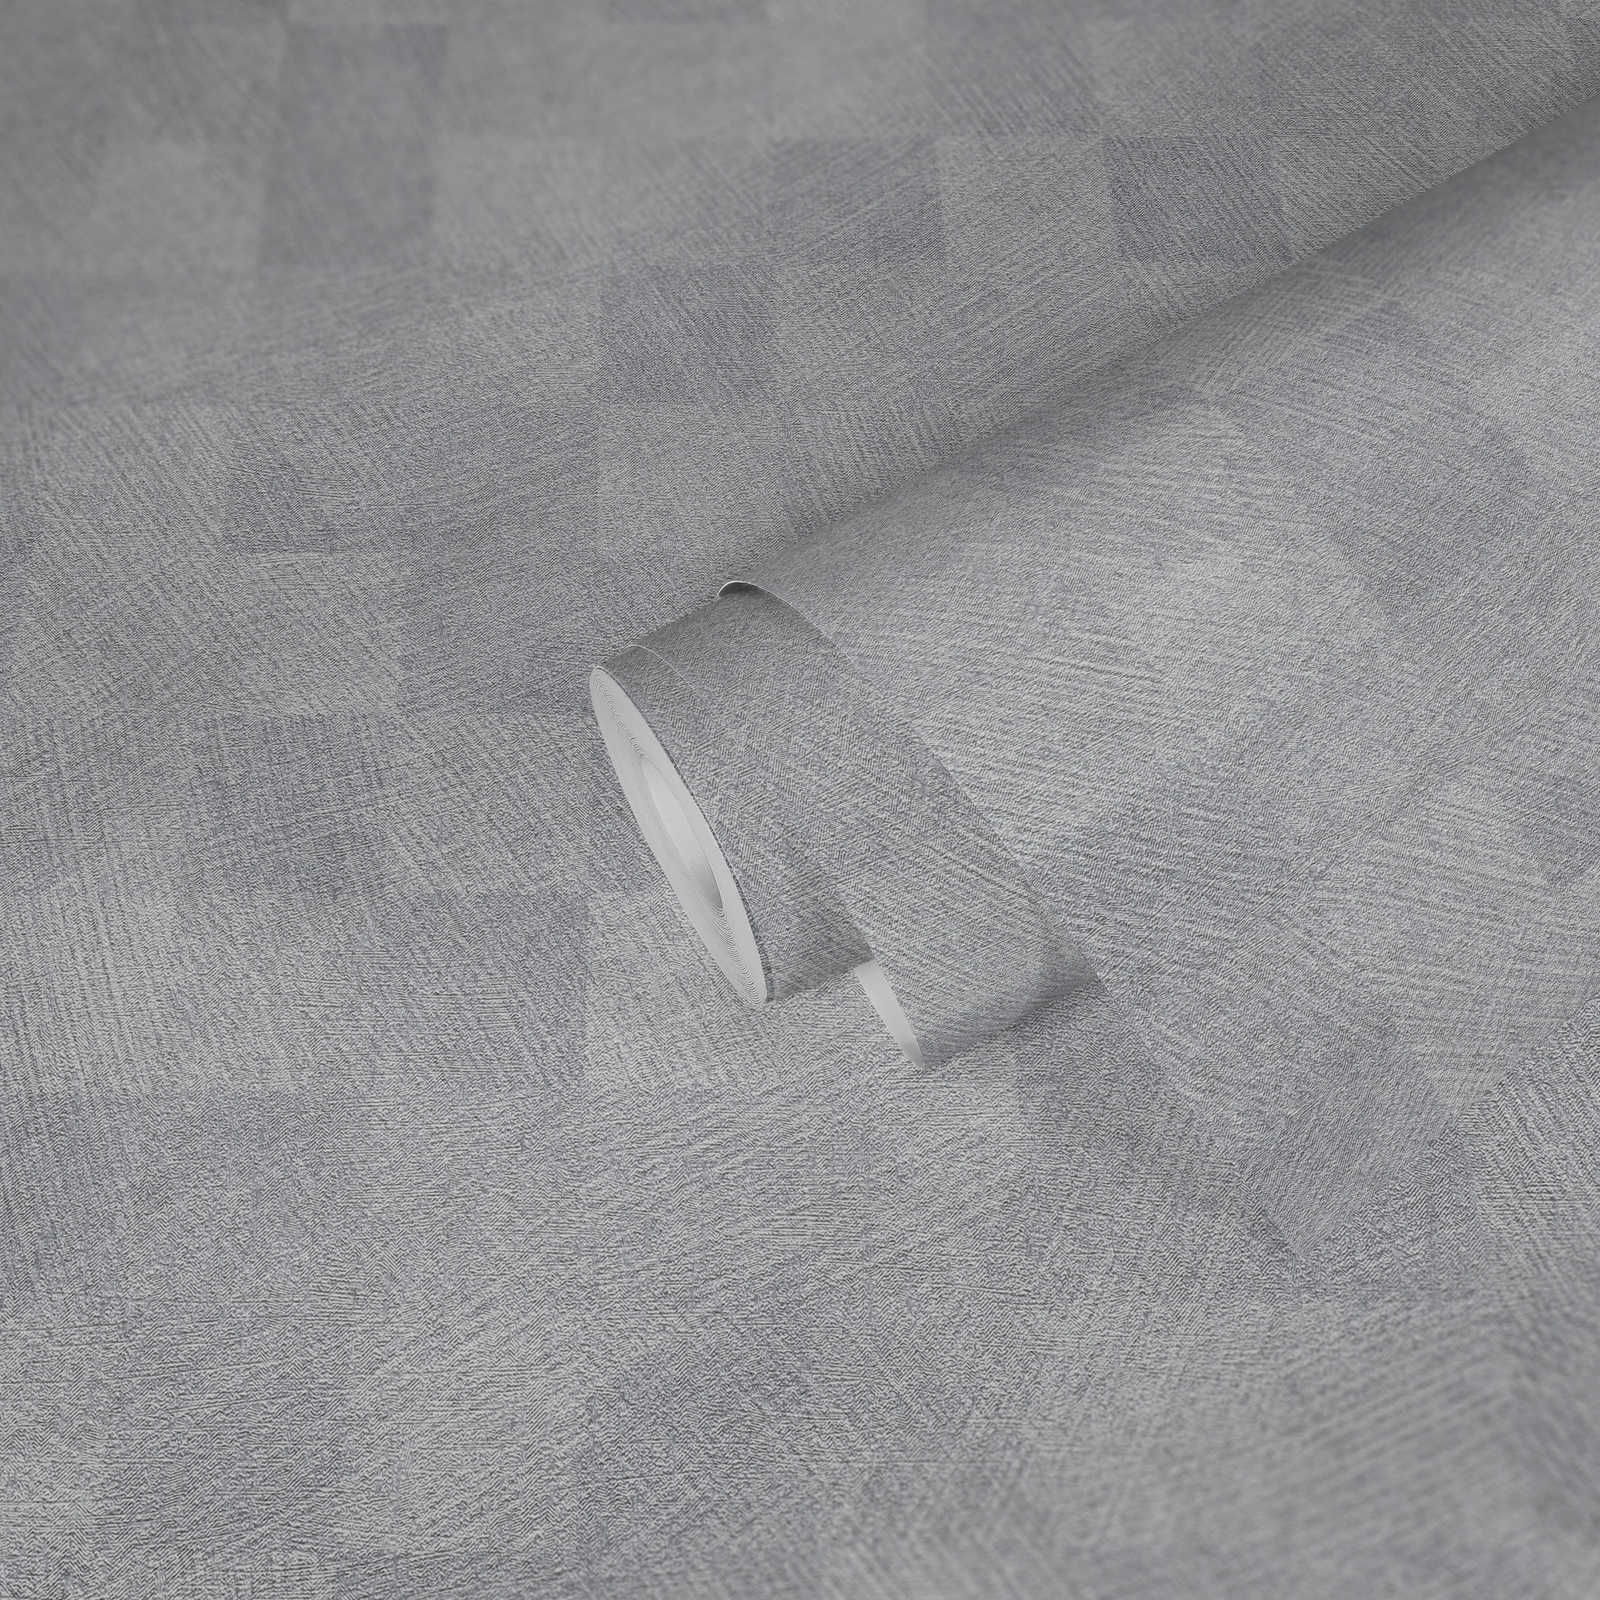             Metallic wallpaper check pattern with gloss effect - grey
        